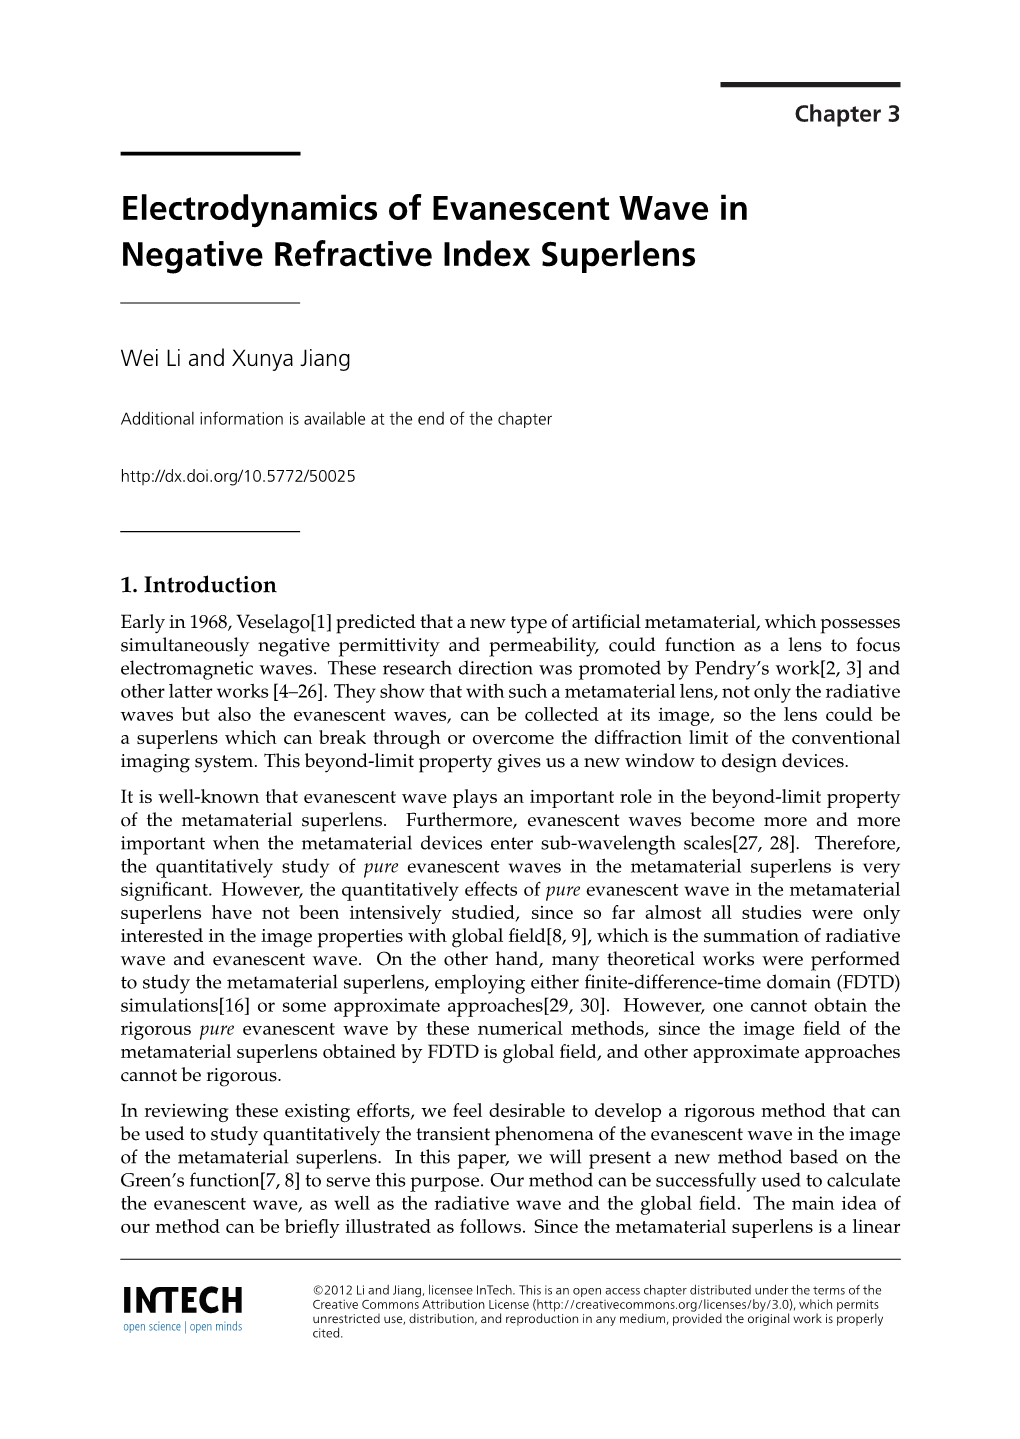 Electrodynamics of Evanescent Wave in Negative Refractive Index Superlens